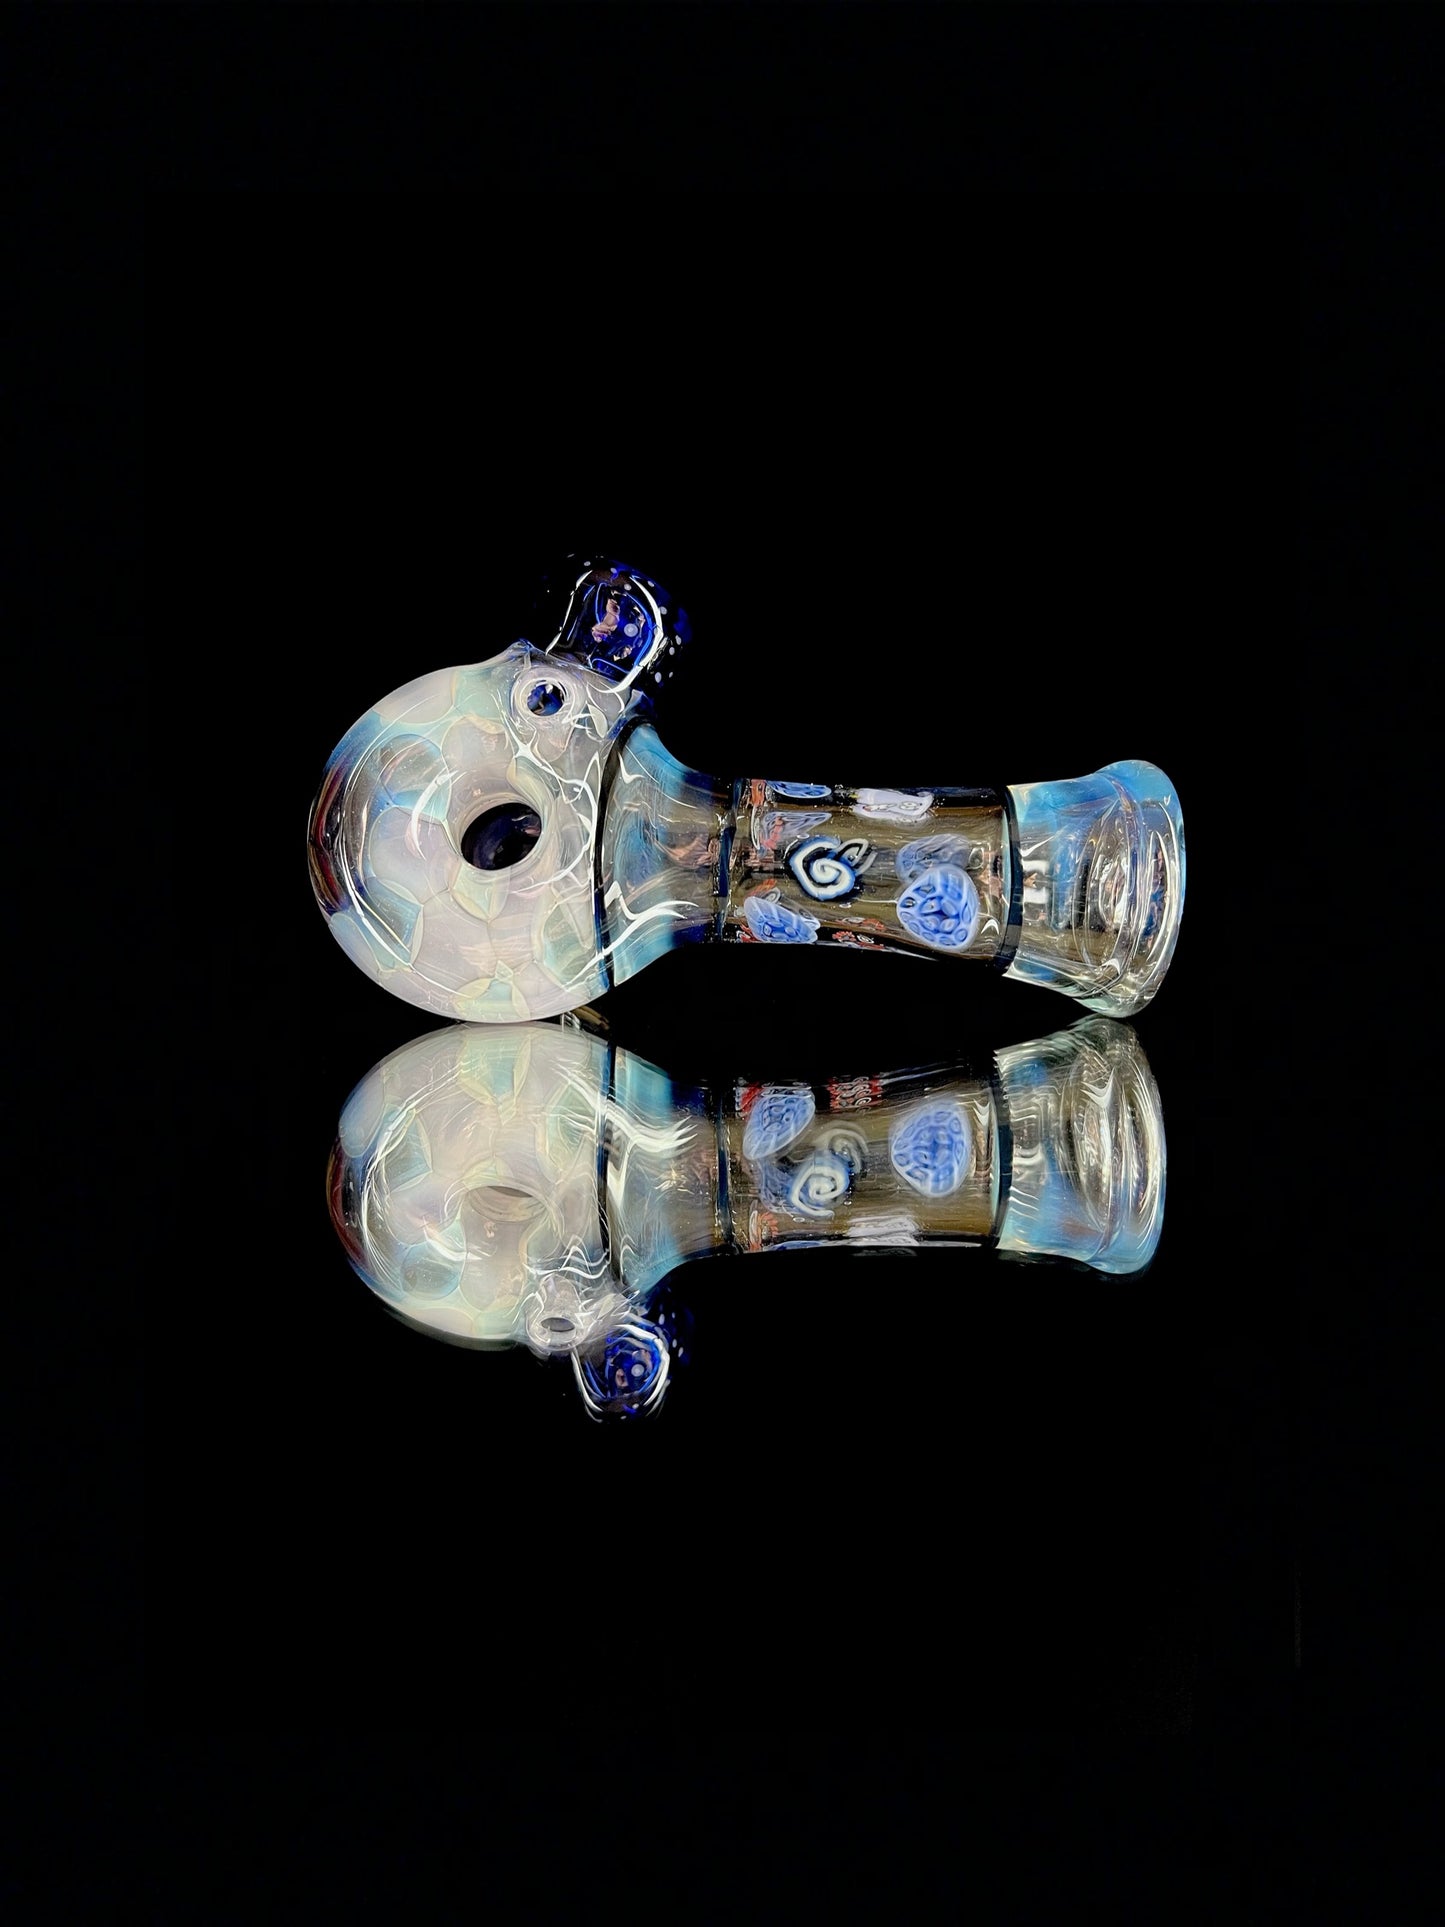 Space tech millie spoon by Hazy Glass